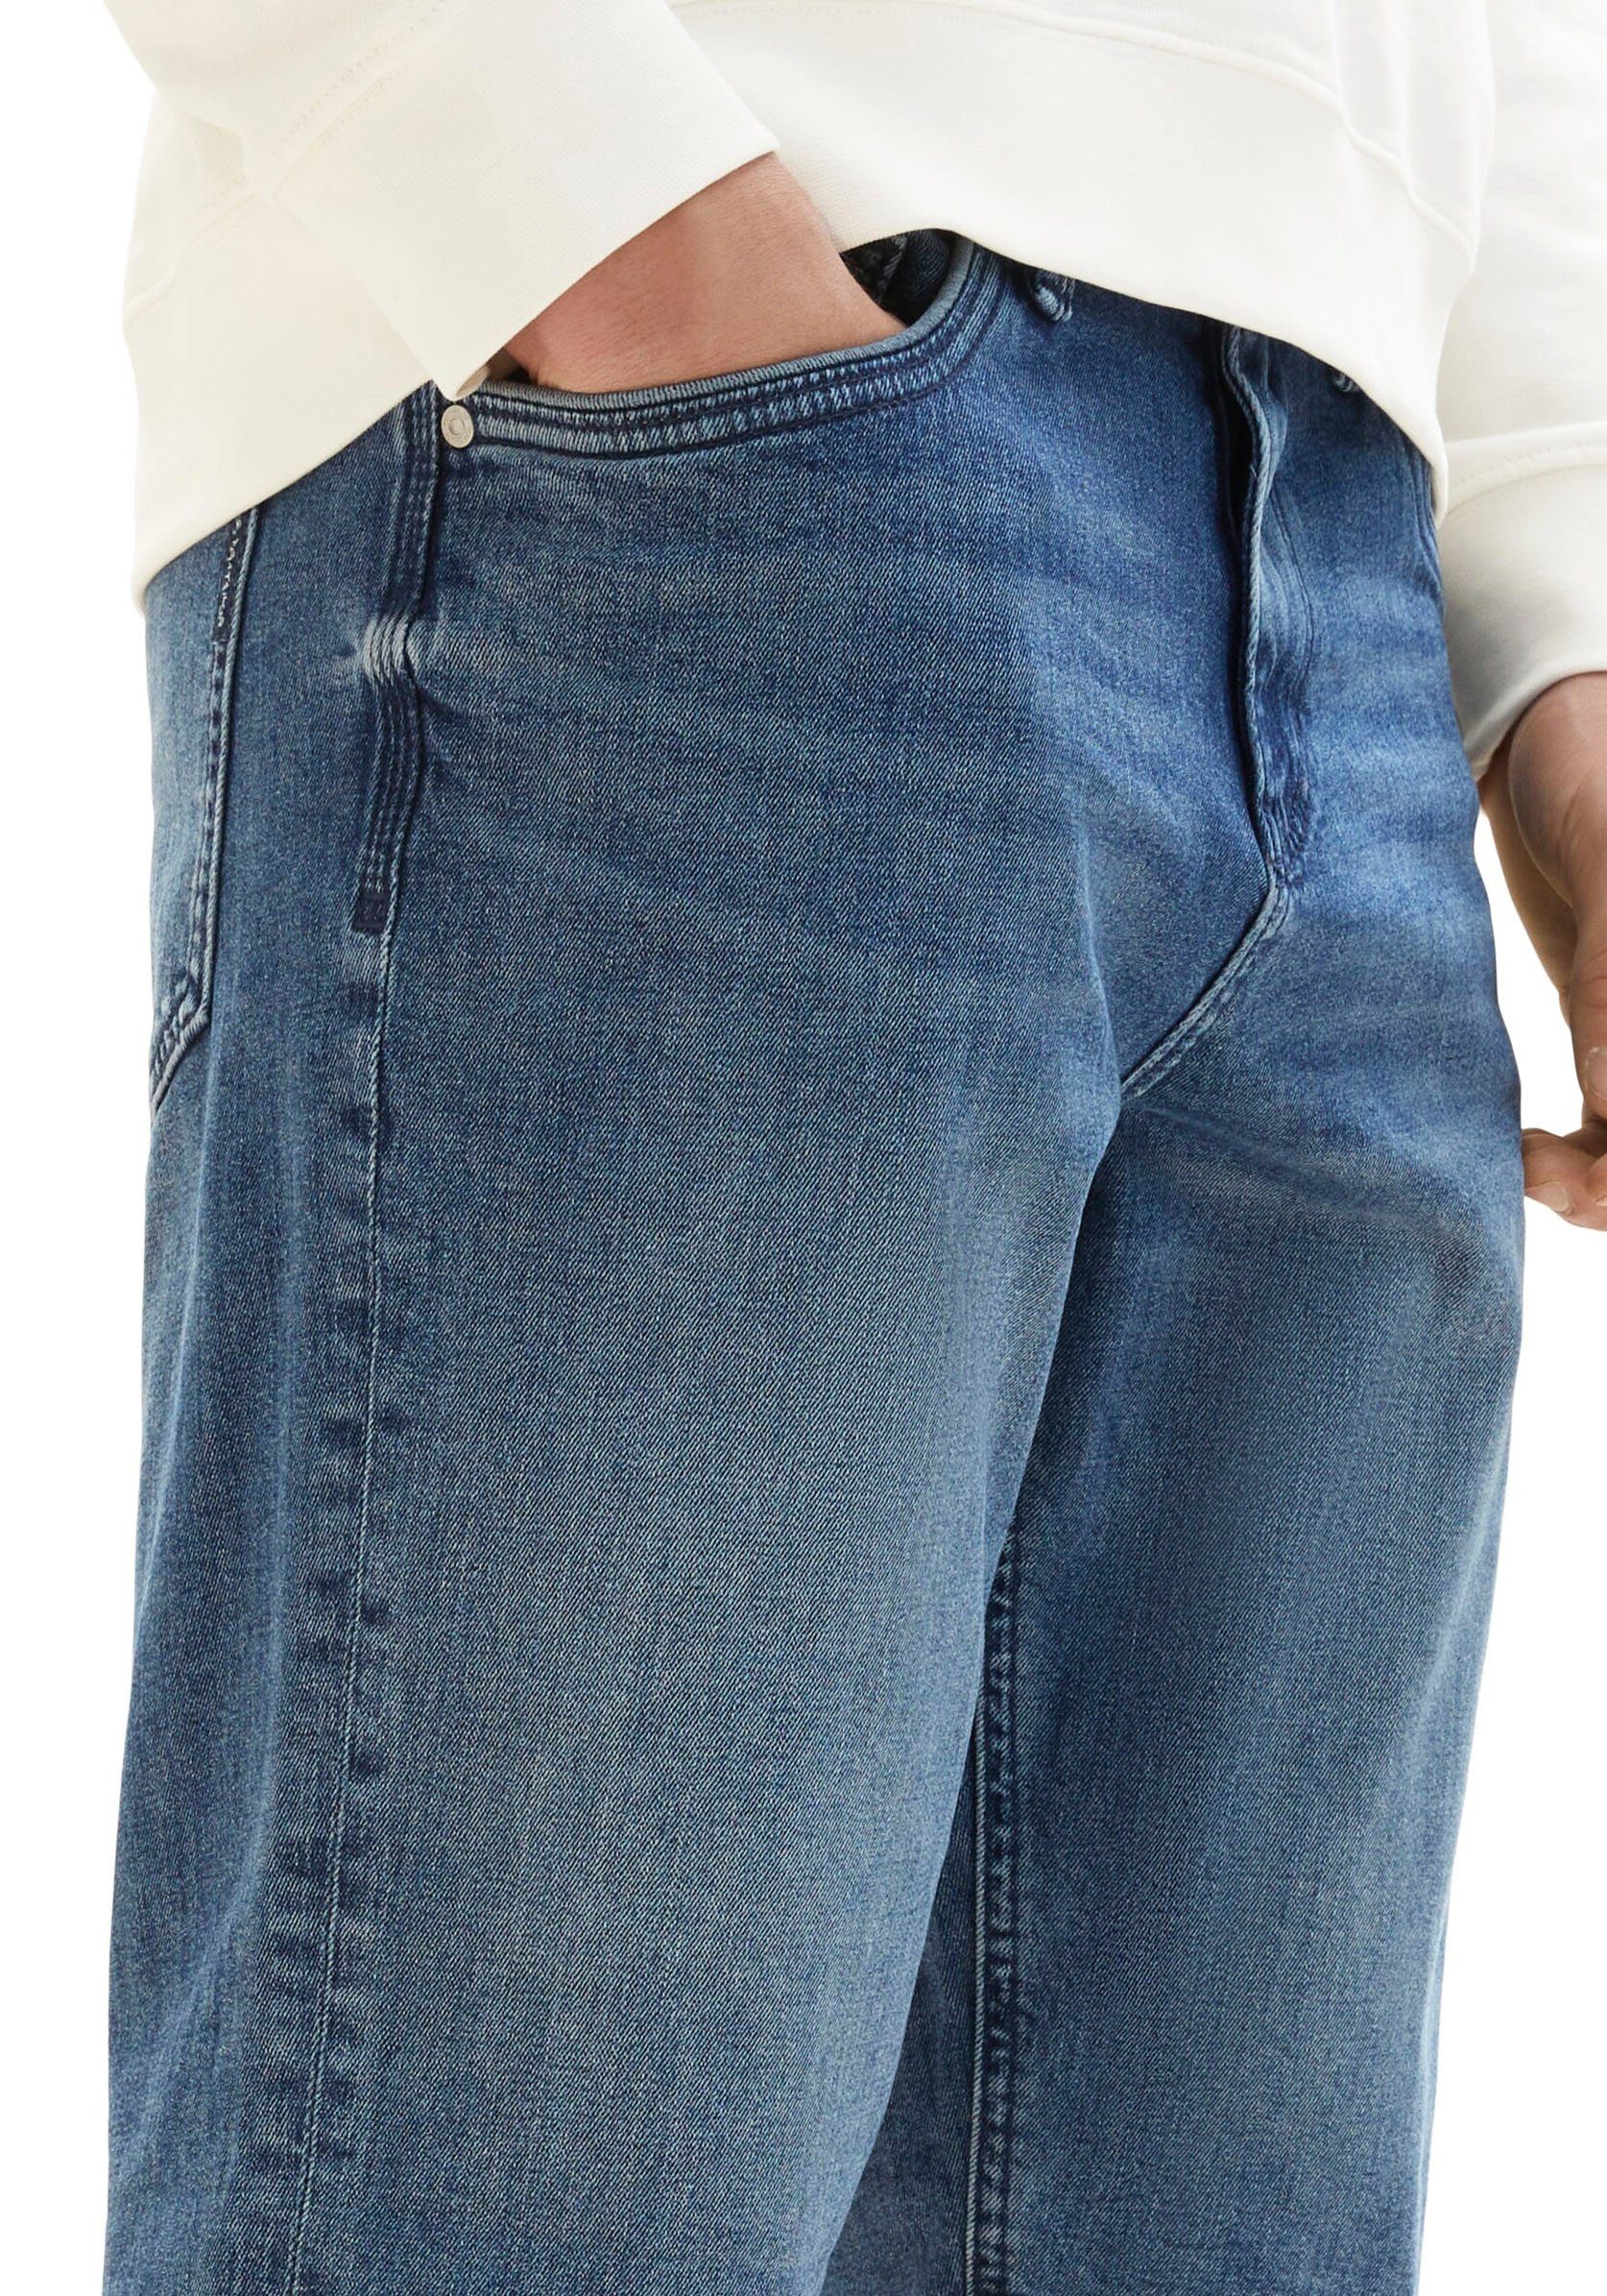 TOM 5-Pocket-Jeans mid stone TAILOR stone